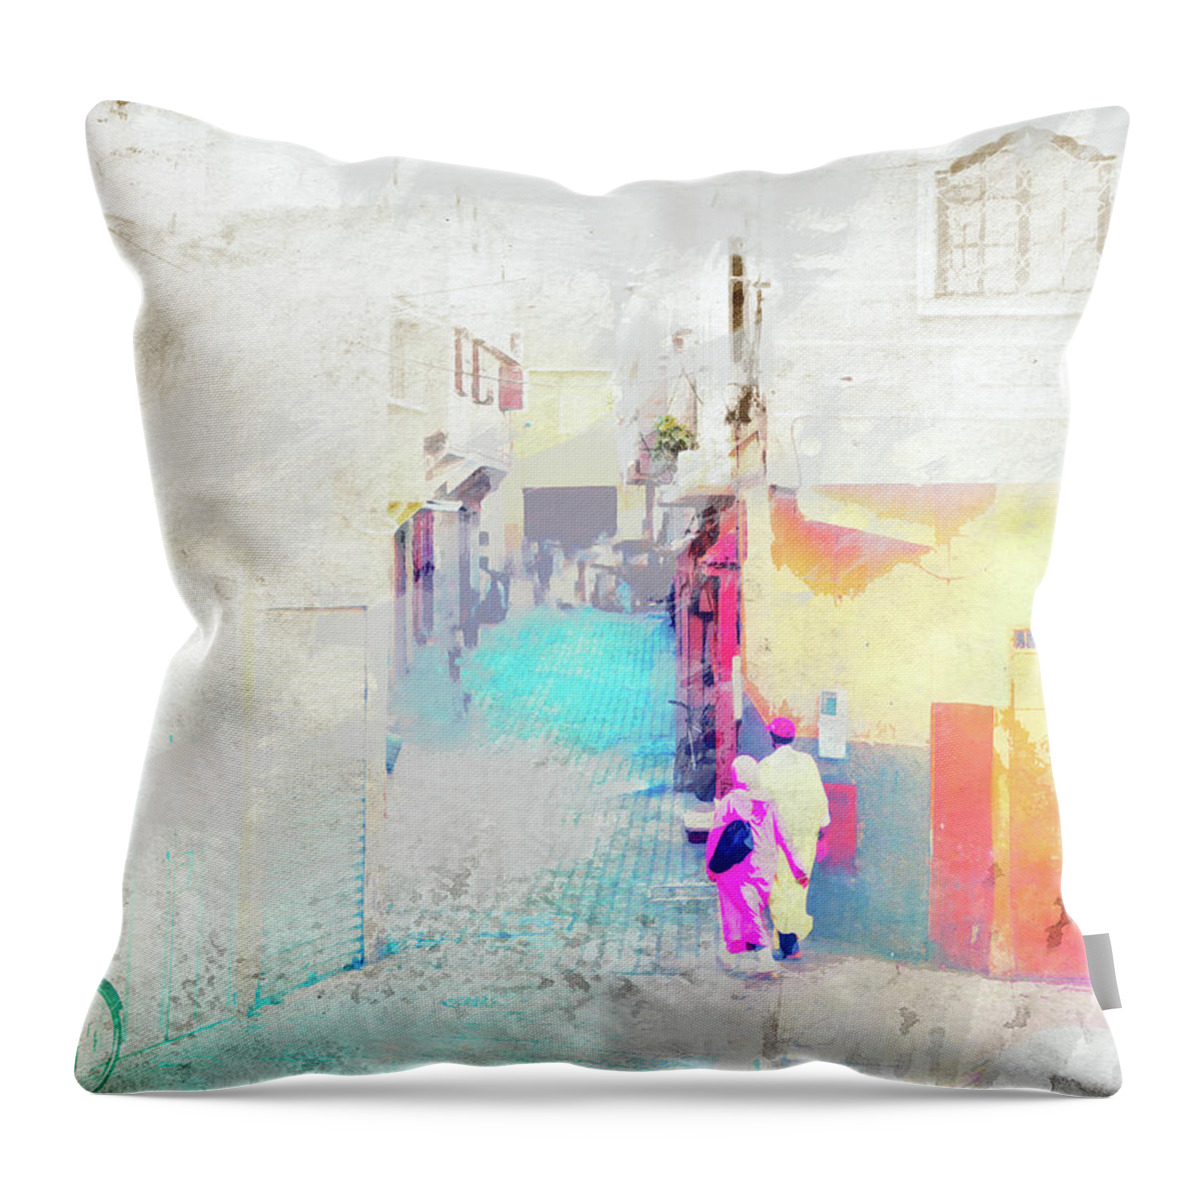 Woman Throw Pillow featuring the digital art Walking through Morocco by Gabi Hampe